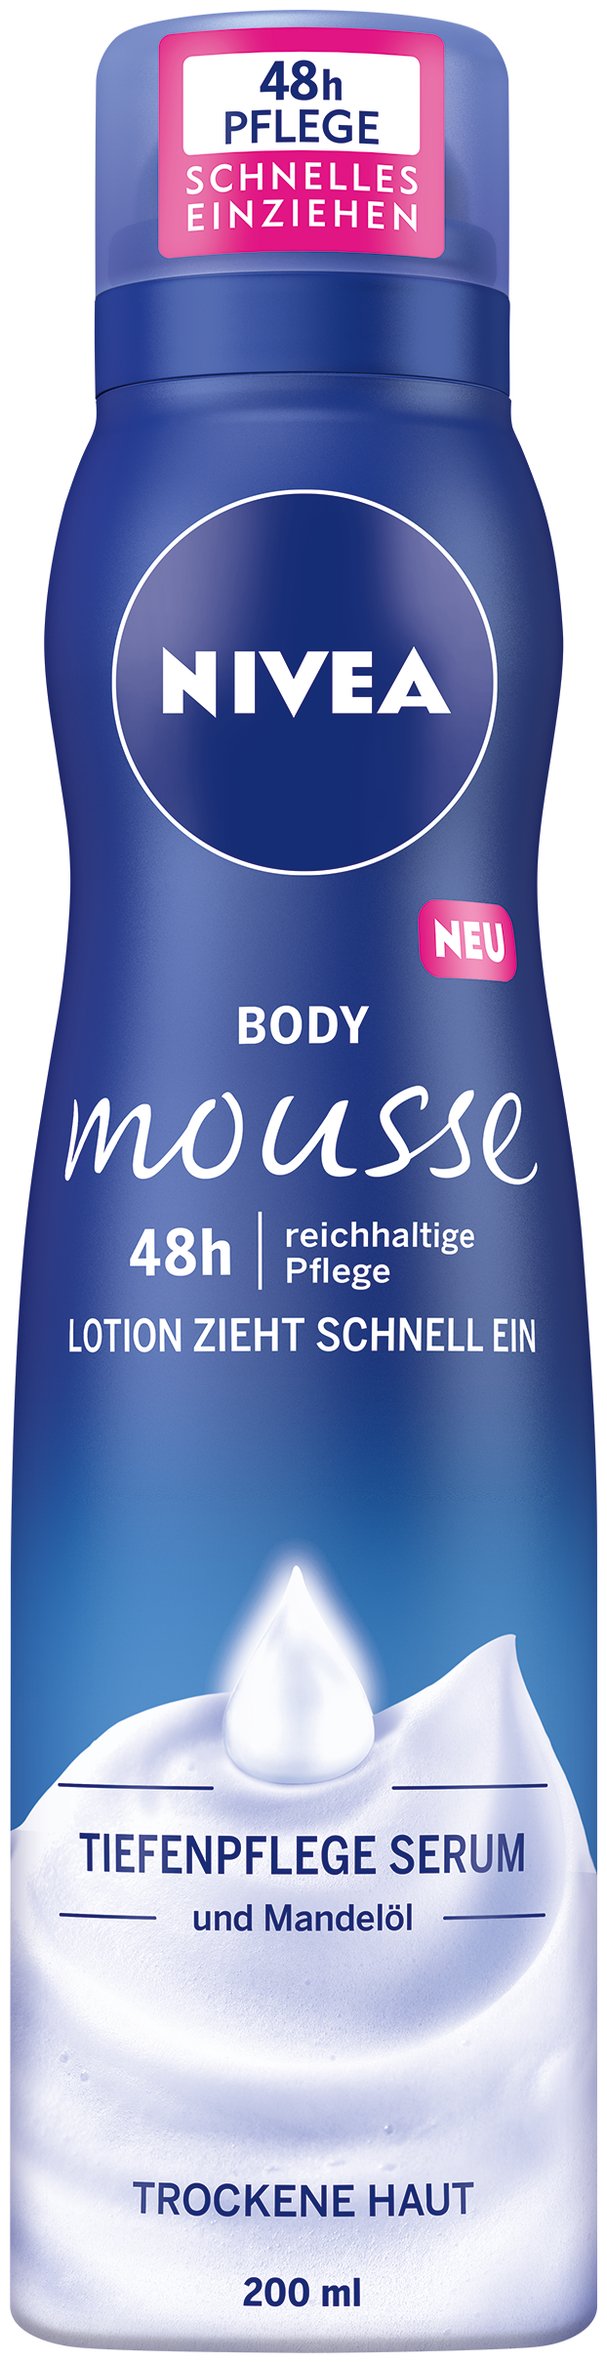 NIVEA Körper Mousse mit Mandelöl, für trockene Haut, Spender, 3er Pack (3 x 100 ml)